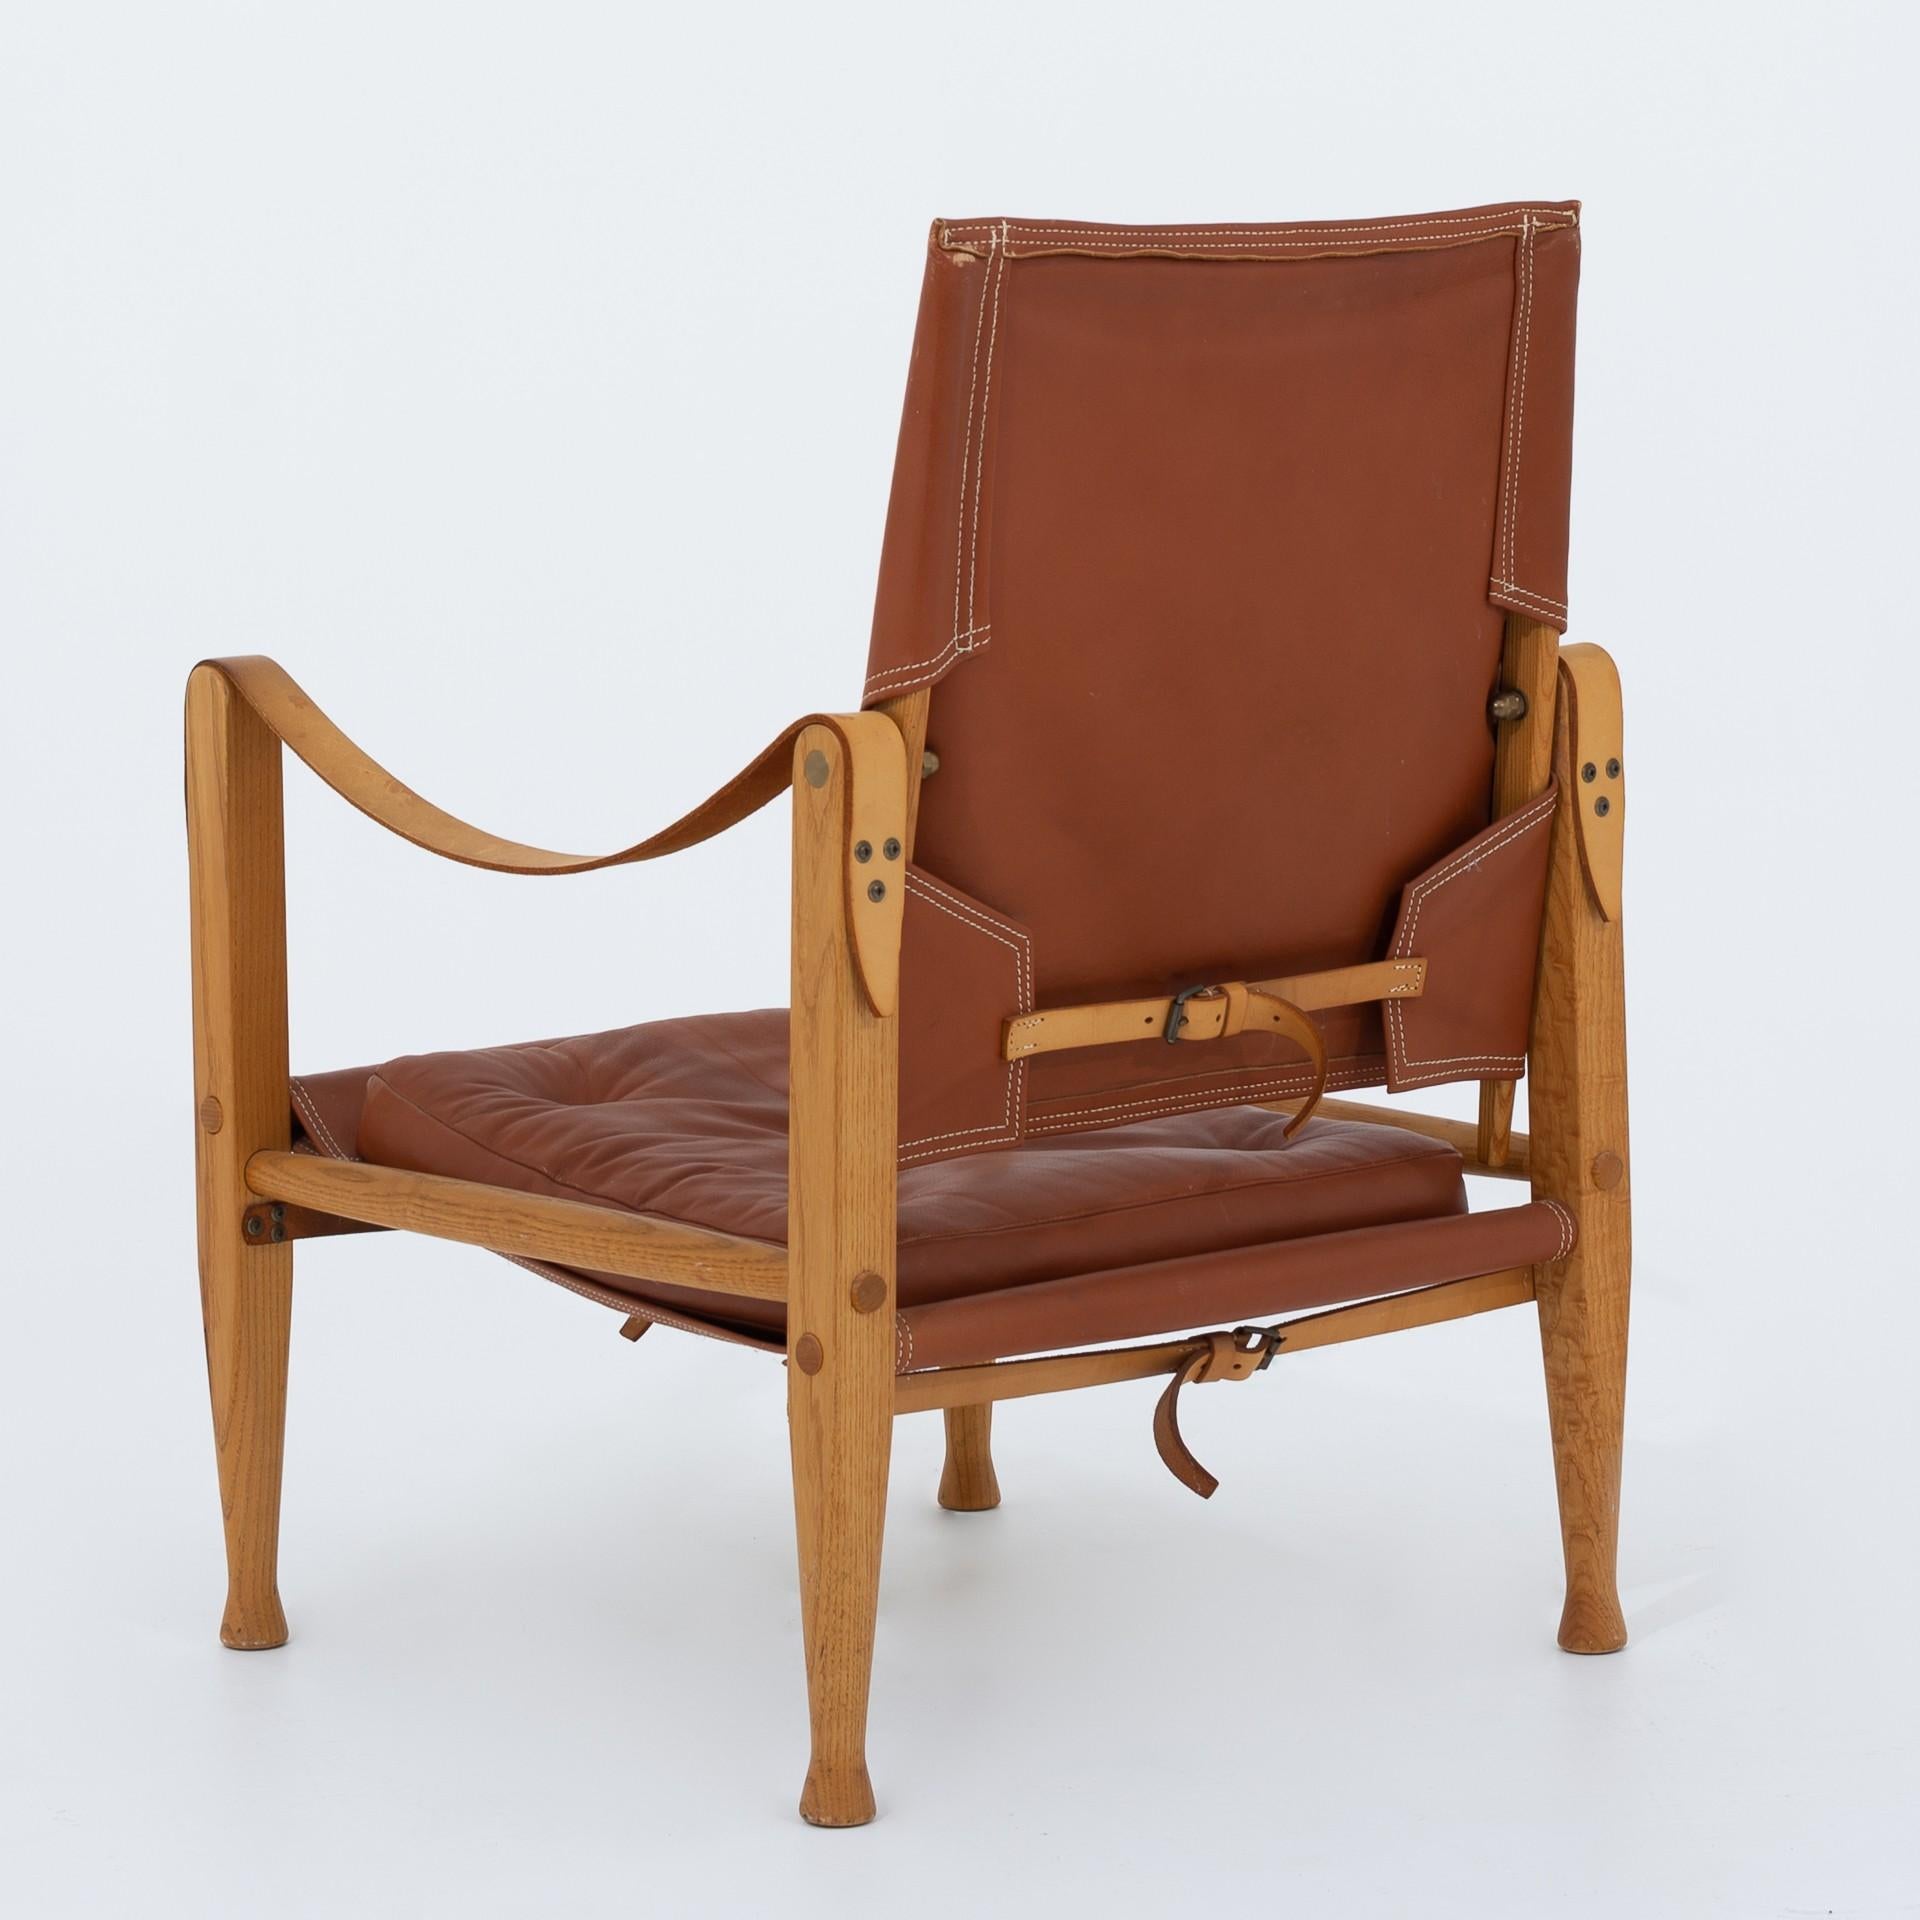 Three safari chair in ash with cushions in cognac leather. KK 47000. Maker Rud. Rasmussen.